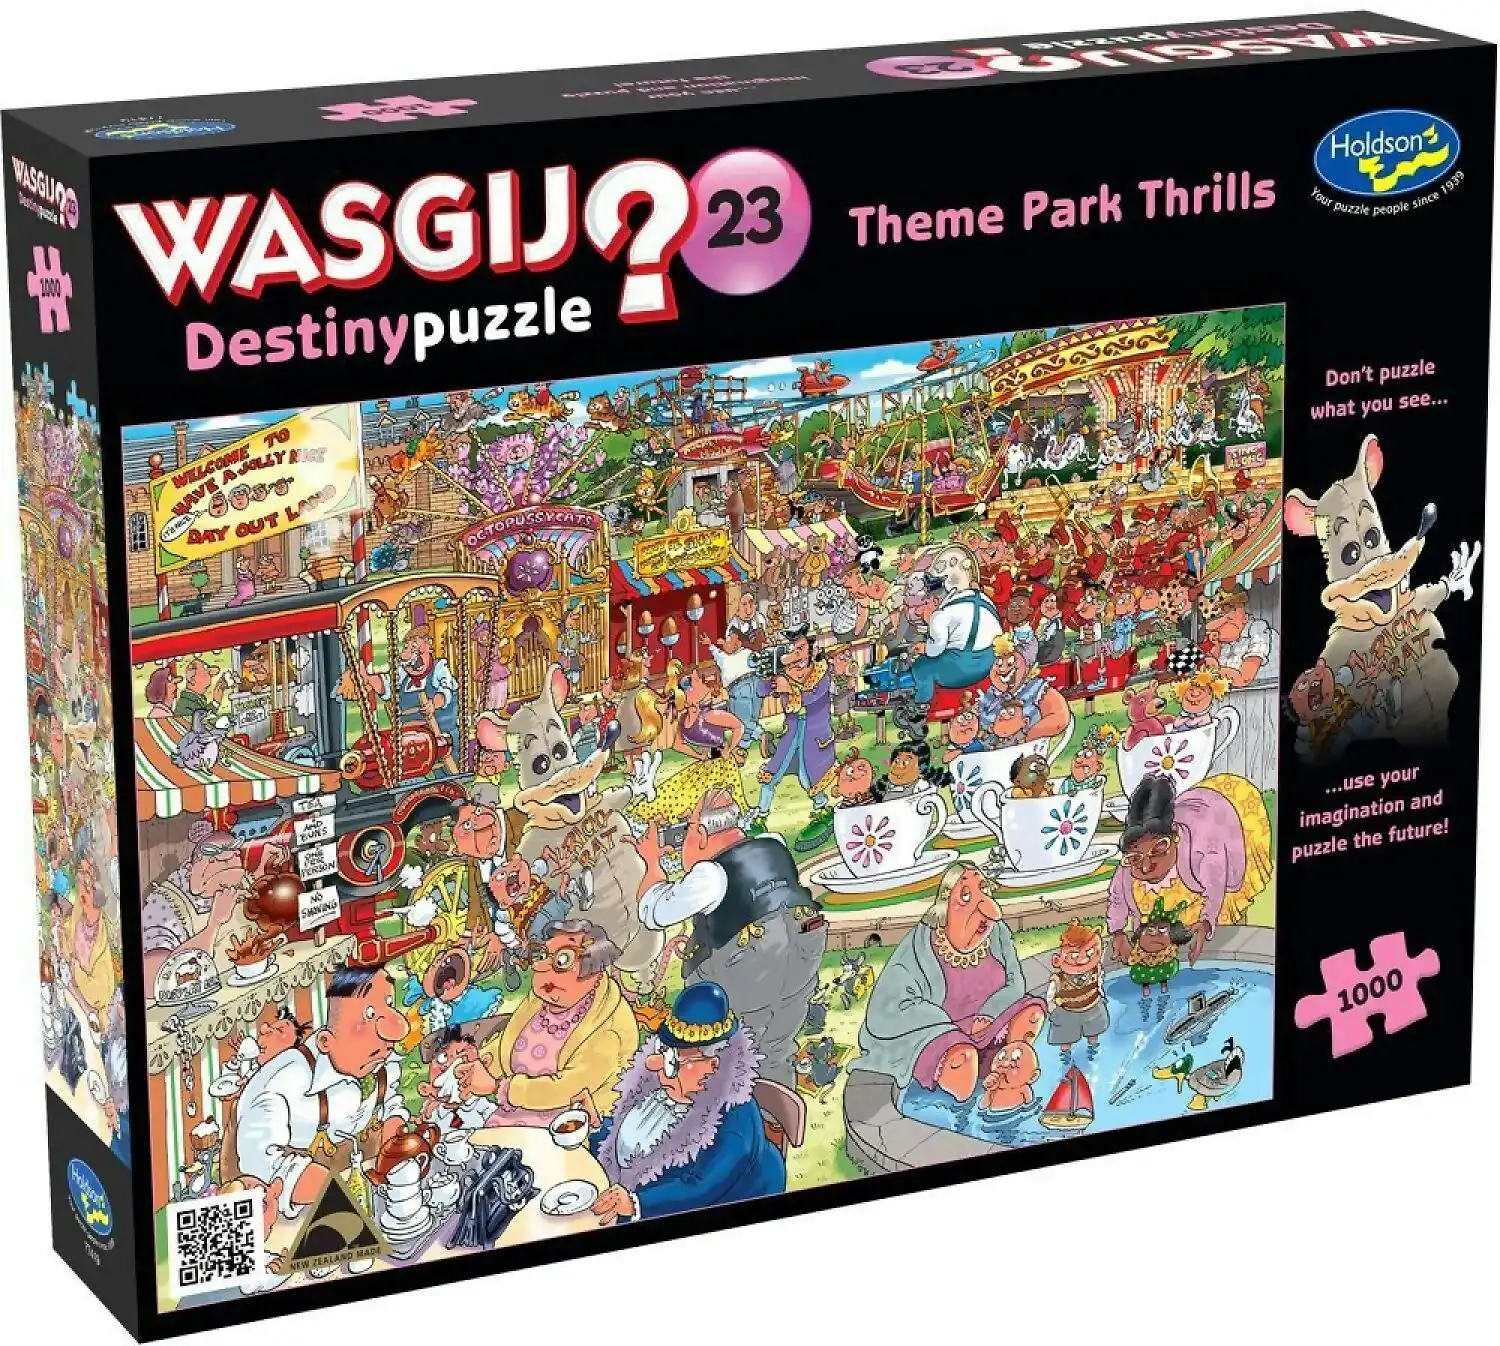 Wasgij - Destiny 23 -Theme Park Thrills - Holdson Jigsaw Puzzle 1000 Pieces